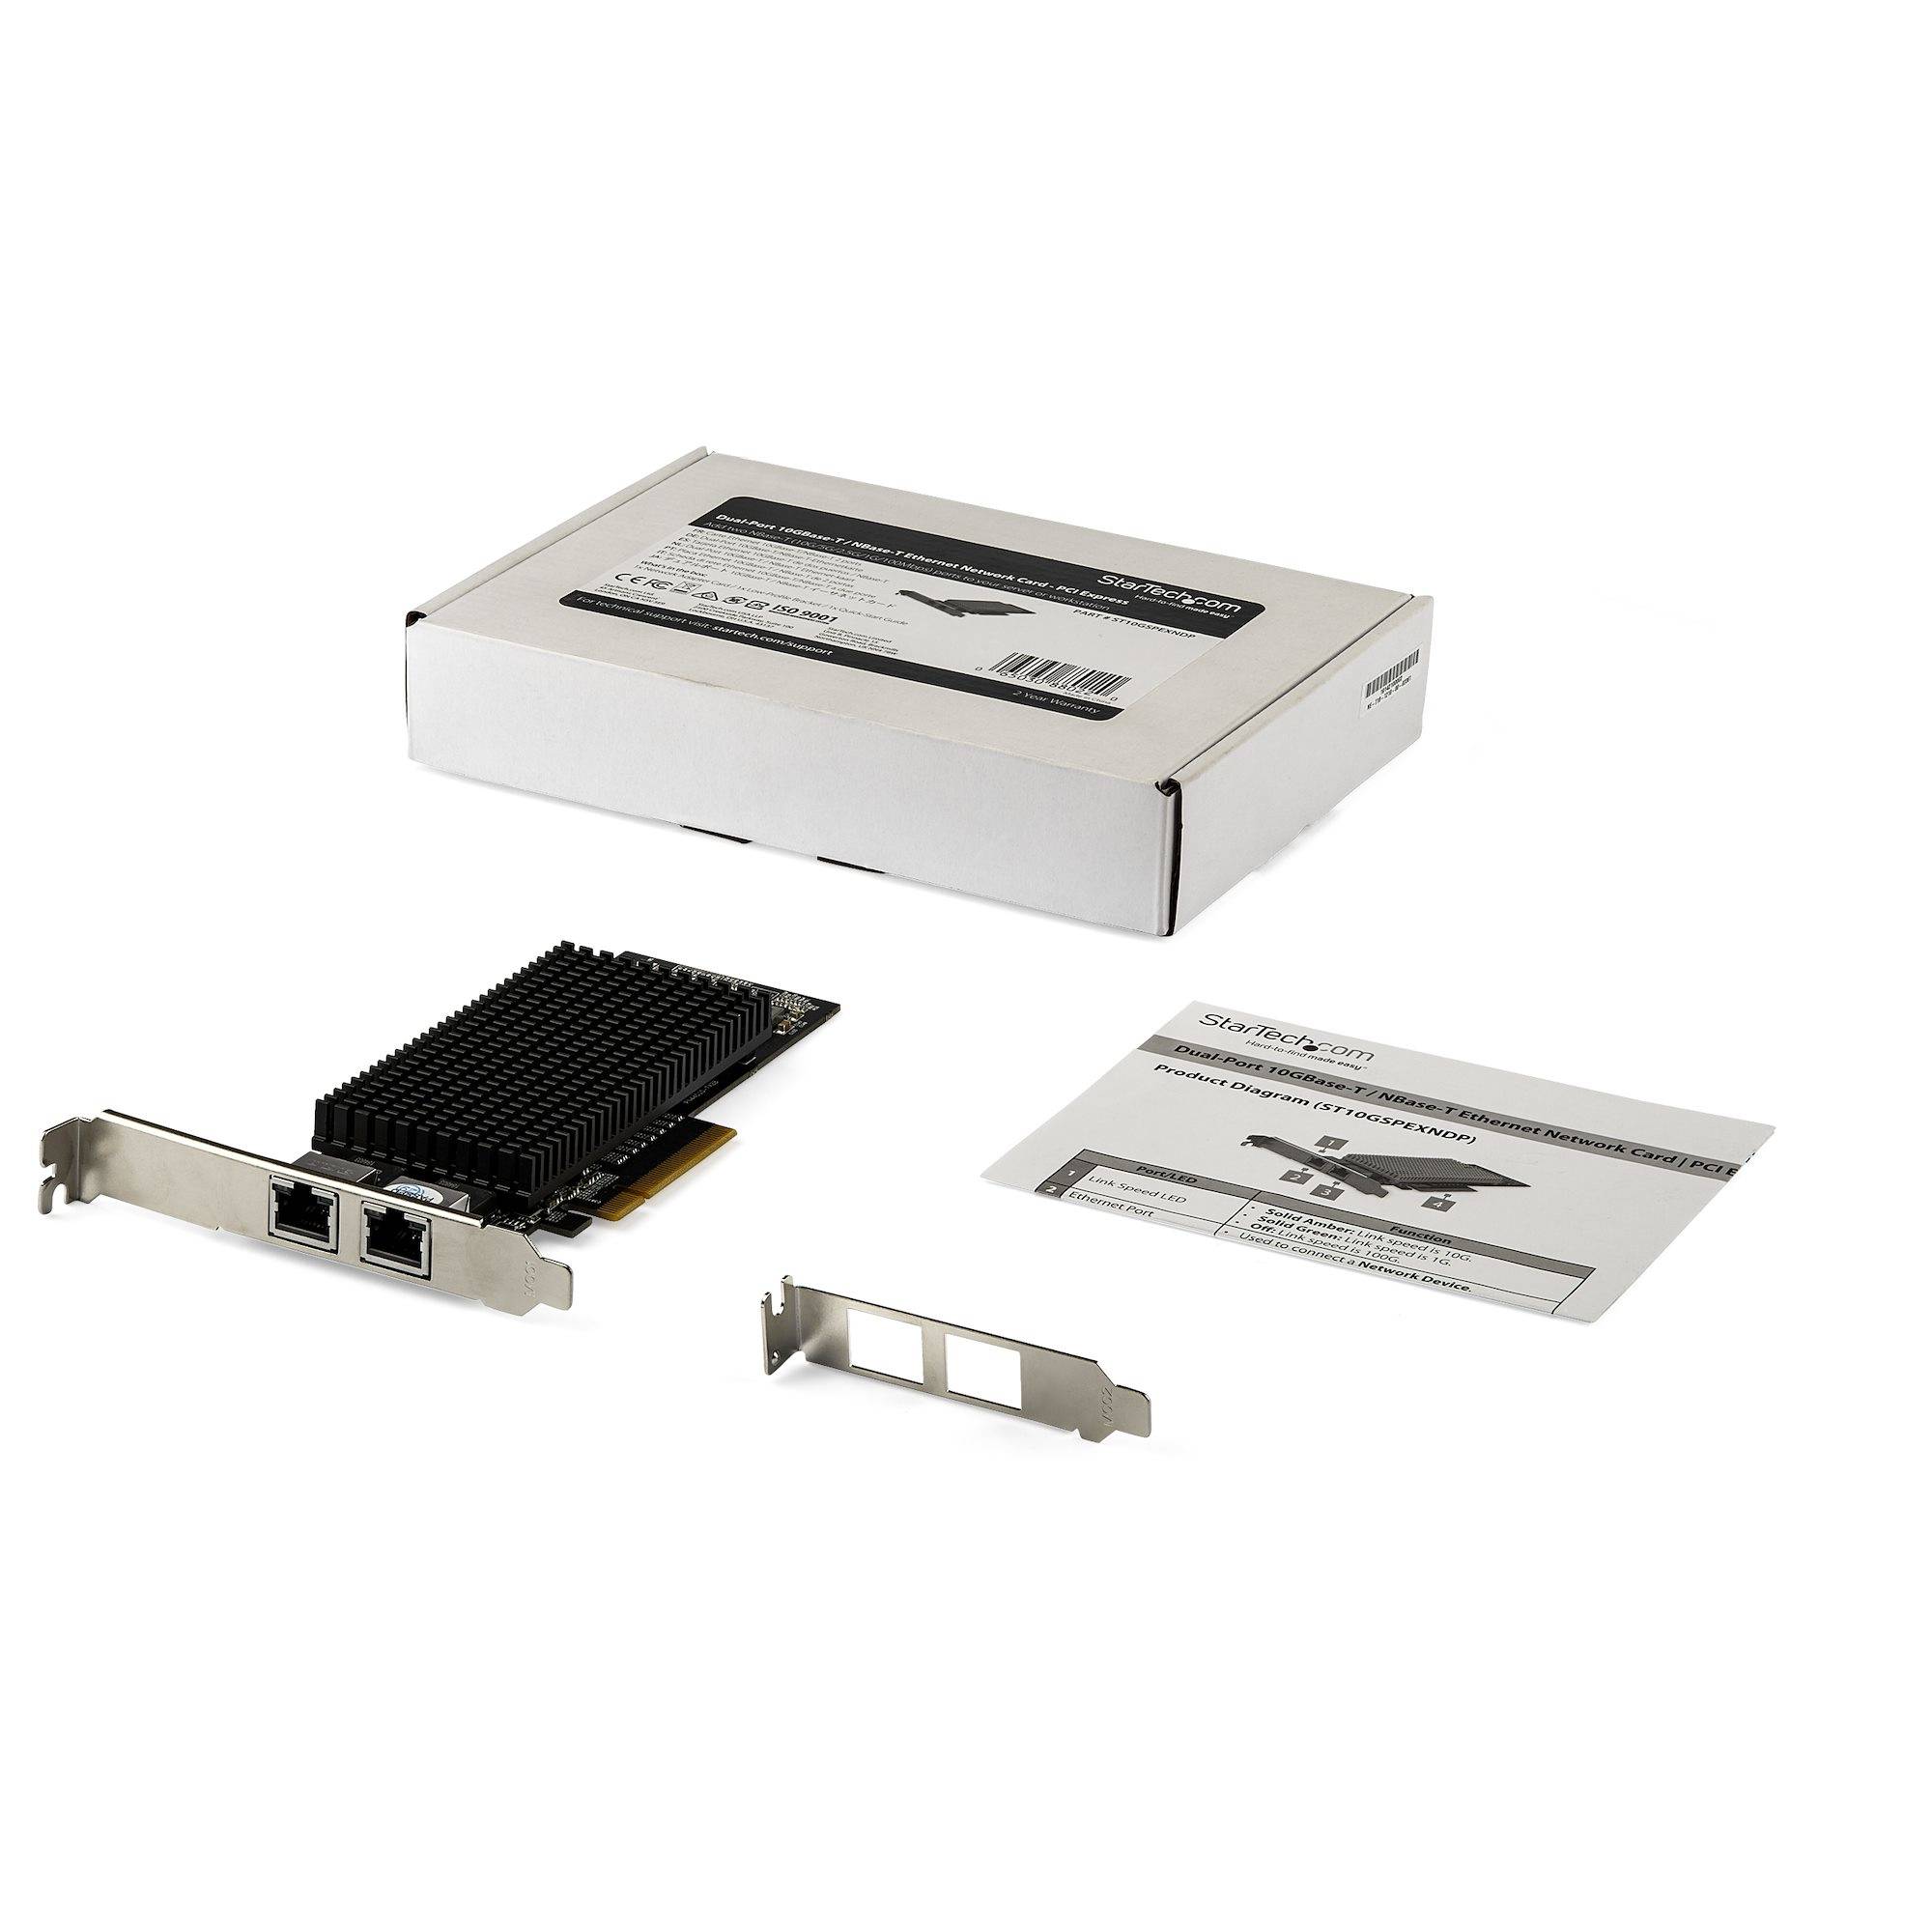 Rca Informatique - image du produit : 10GB PCIE NETWORK CARD DUAL PORT NIC 10GBASET+NBASE-T